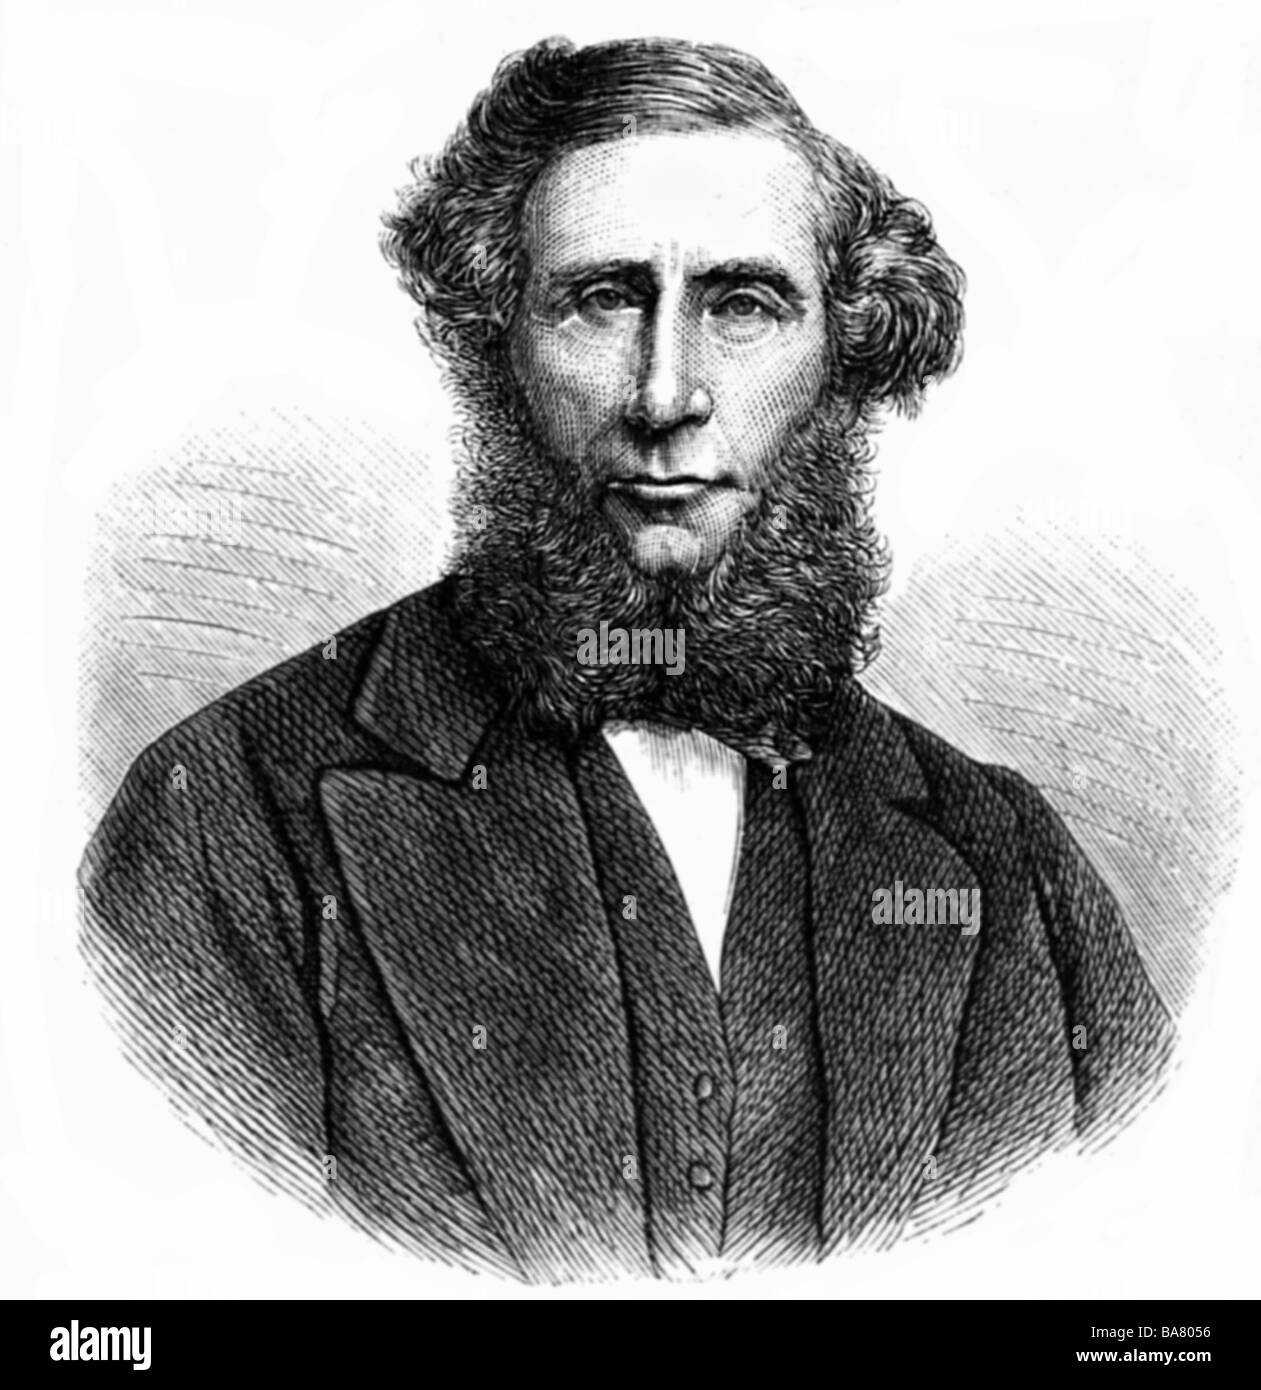 Tyndall John, 2.8.1820 - 4.12.1893, portrait, wood engraving, 19th century, Stock Photo